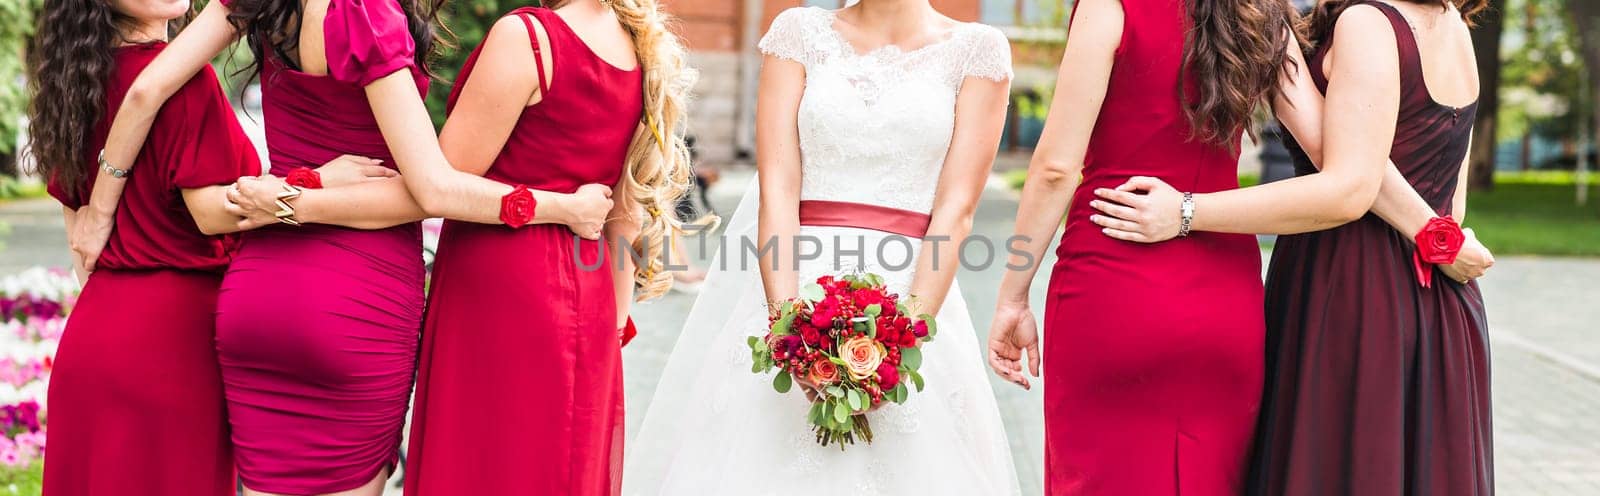 Beautiful bride and bridesmaids posing outdoors in park